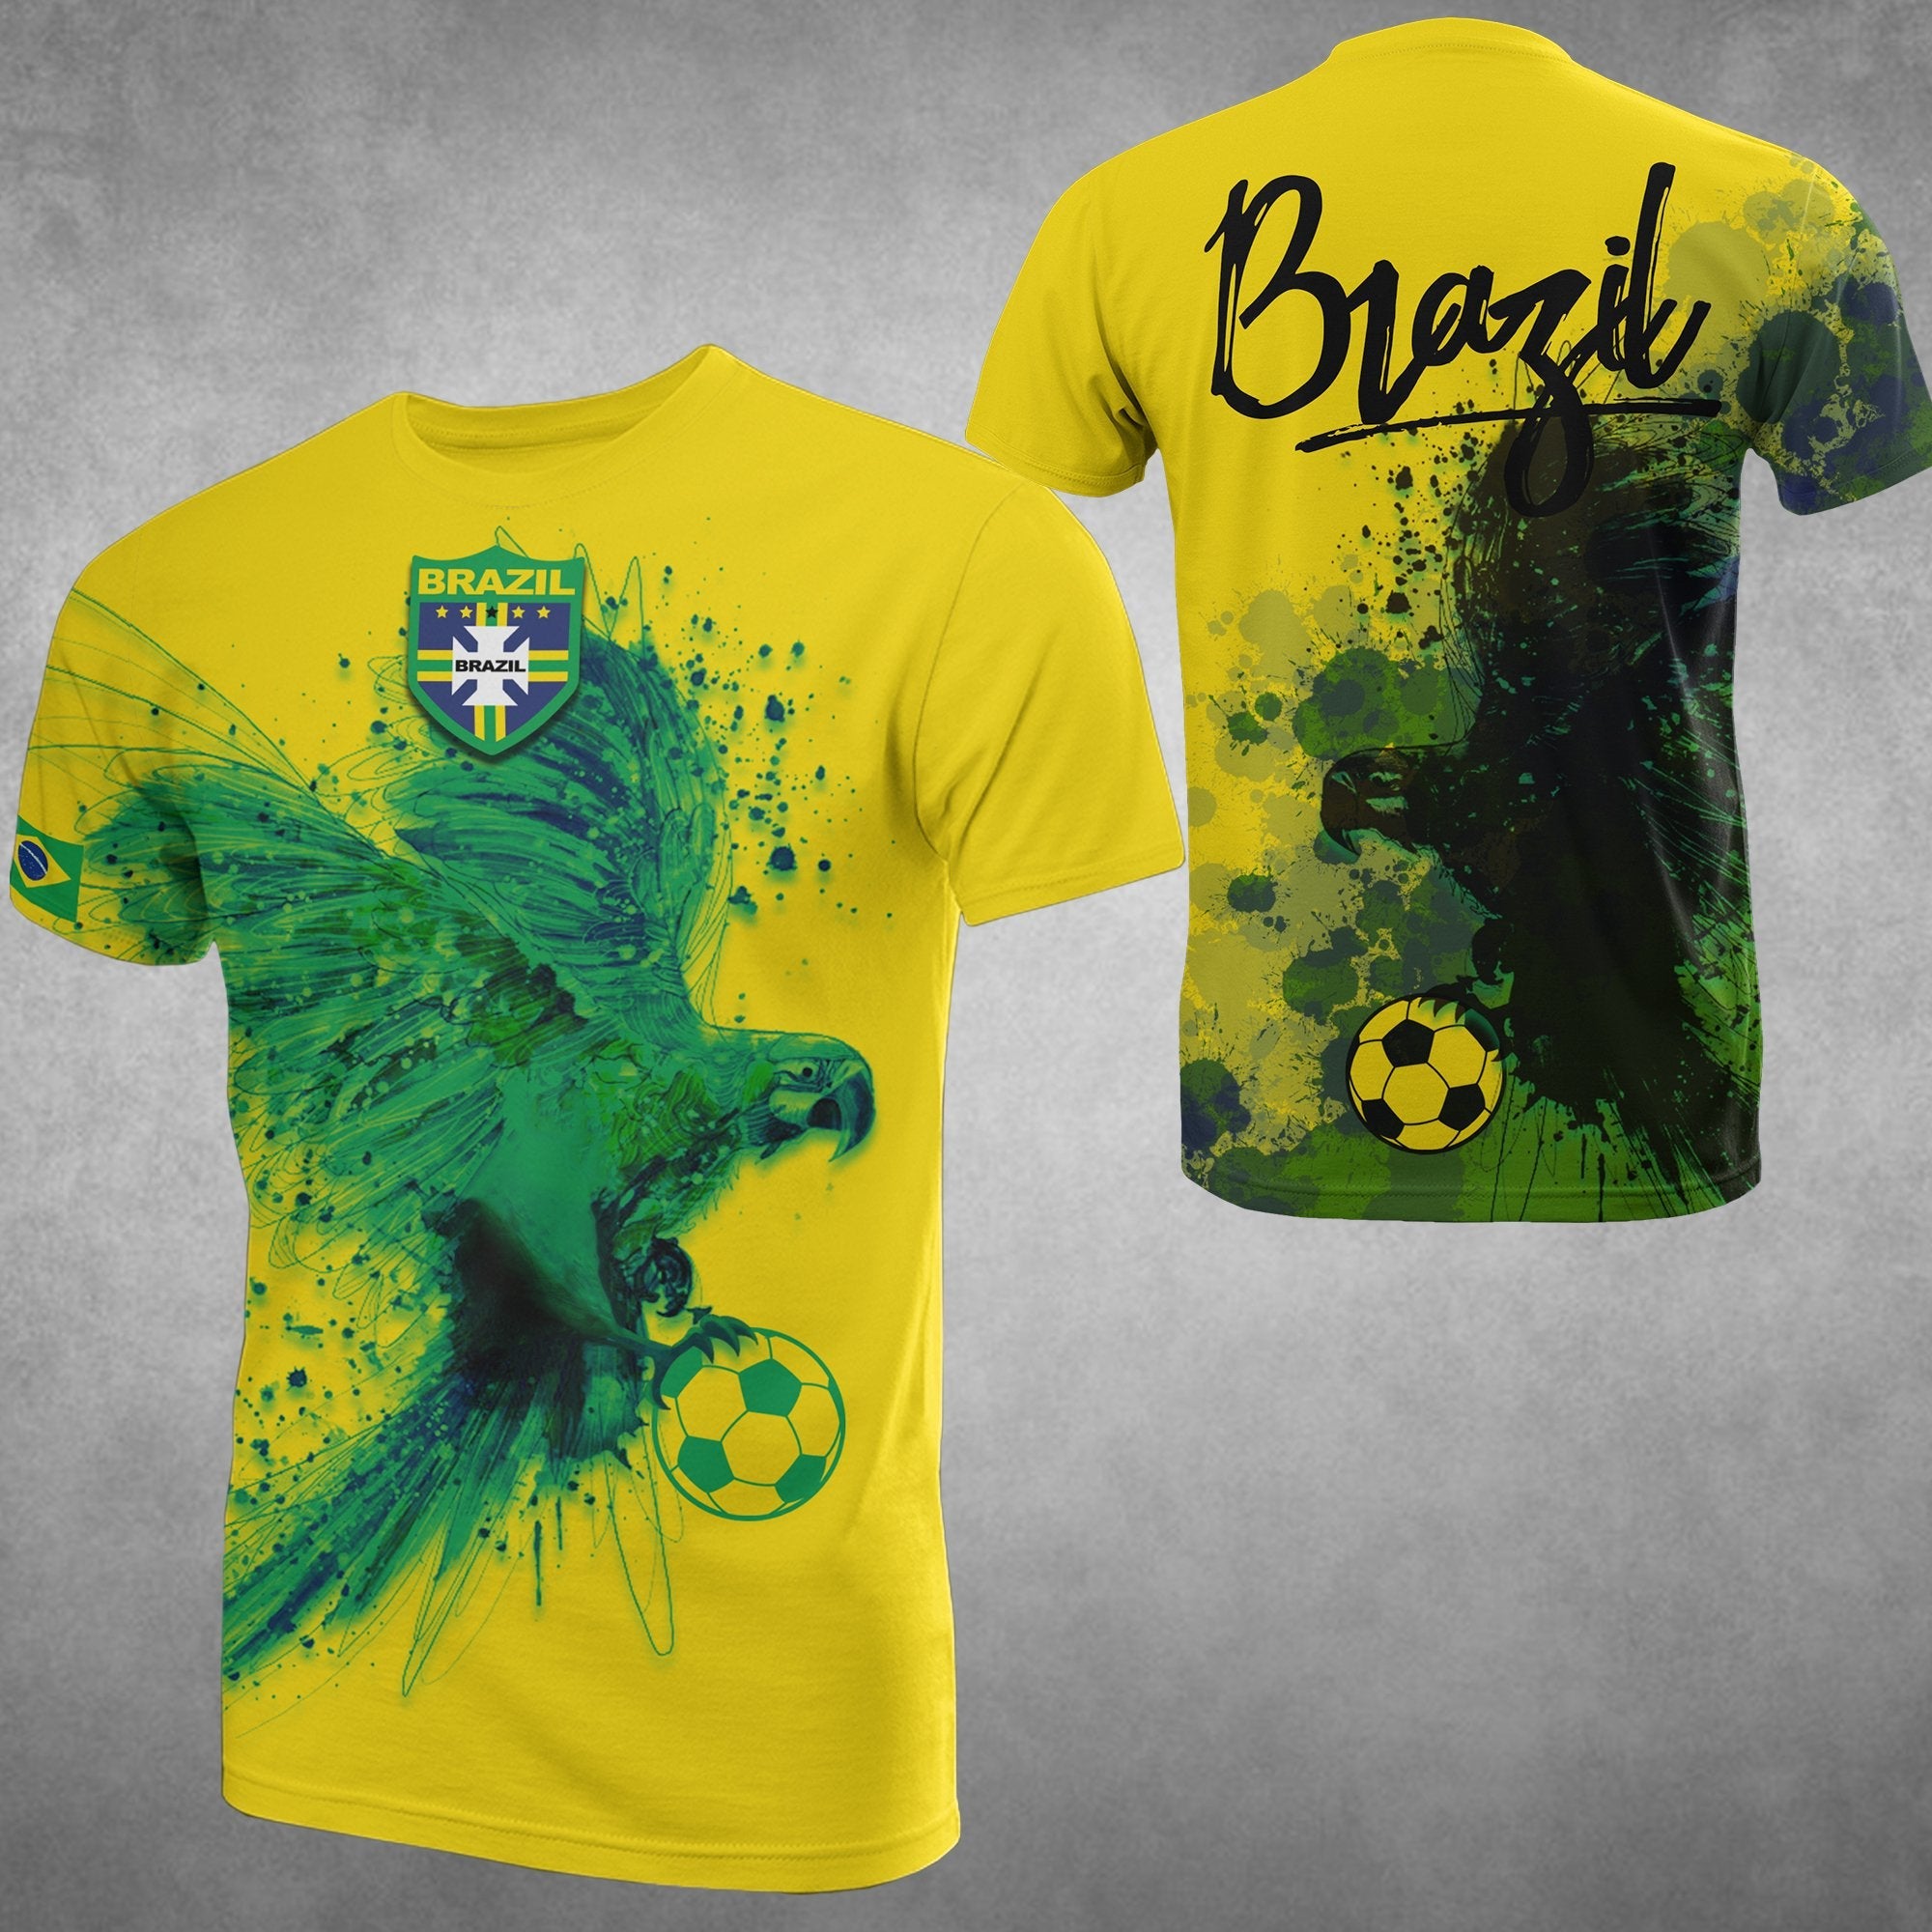 brazil-macaw-parrot-t-shirts